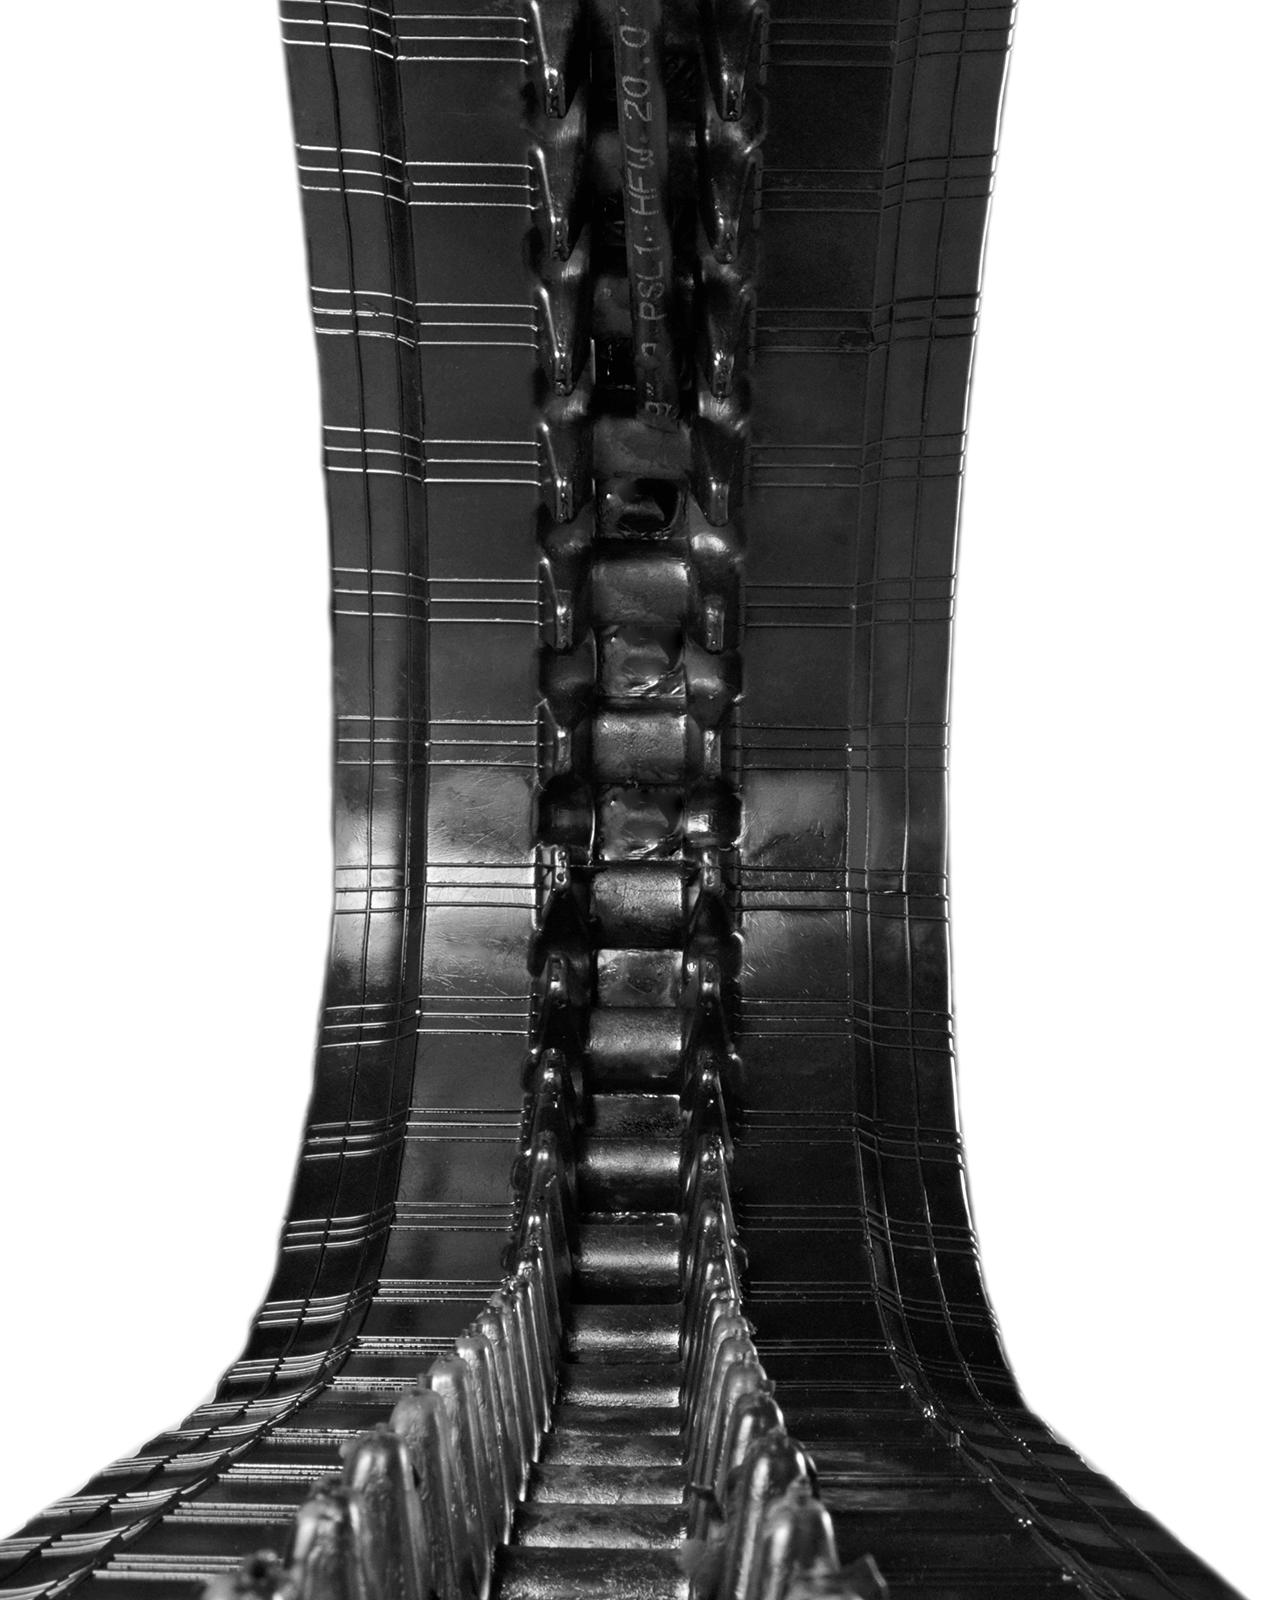 set of 2 13" standard duty c pattern rubber track (320x84bx46)